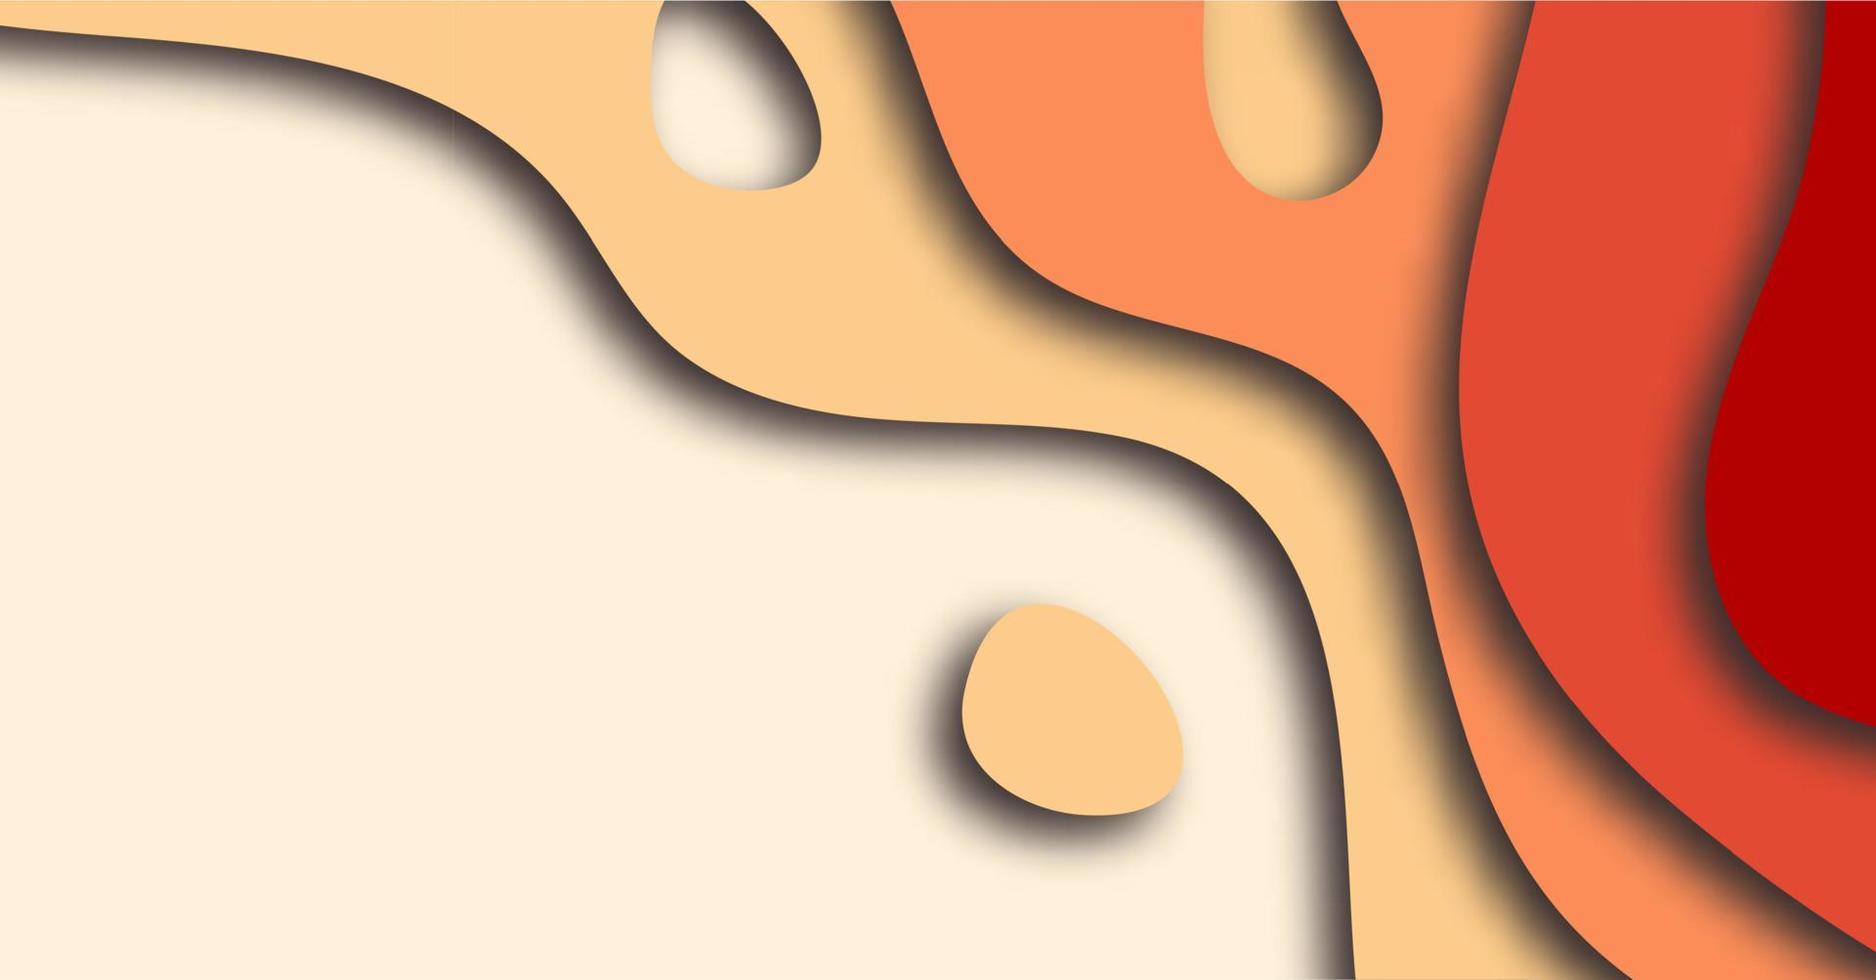 abstrakt bakgrund med orange papper skära former baner design. vektor illustration.